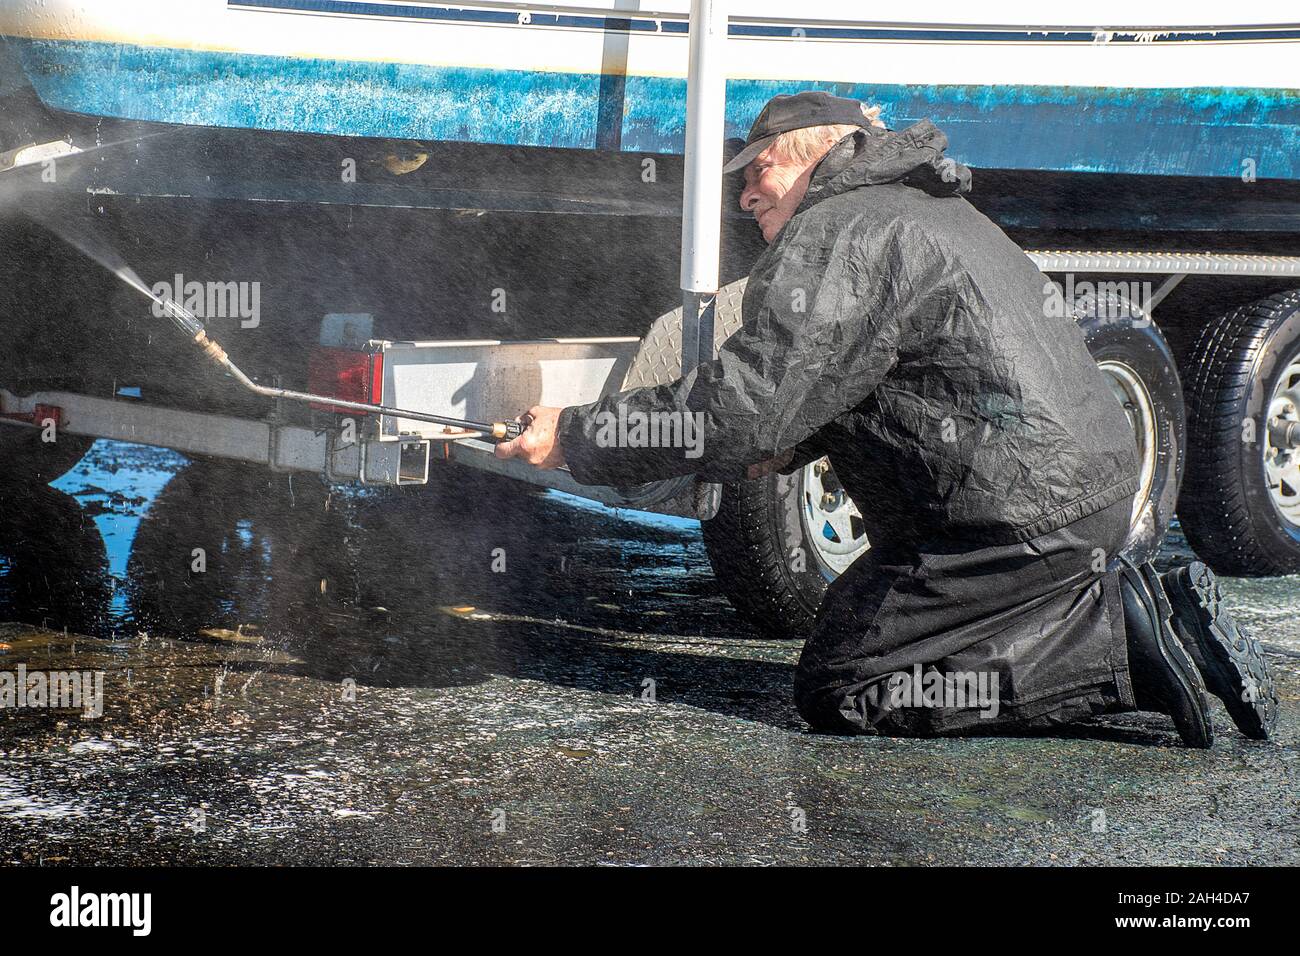 kneeling Caucasian man using pressure washer to clean boat hull Stock Photo